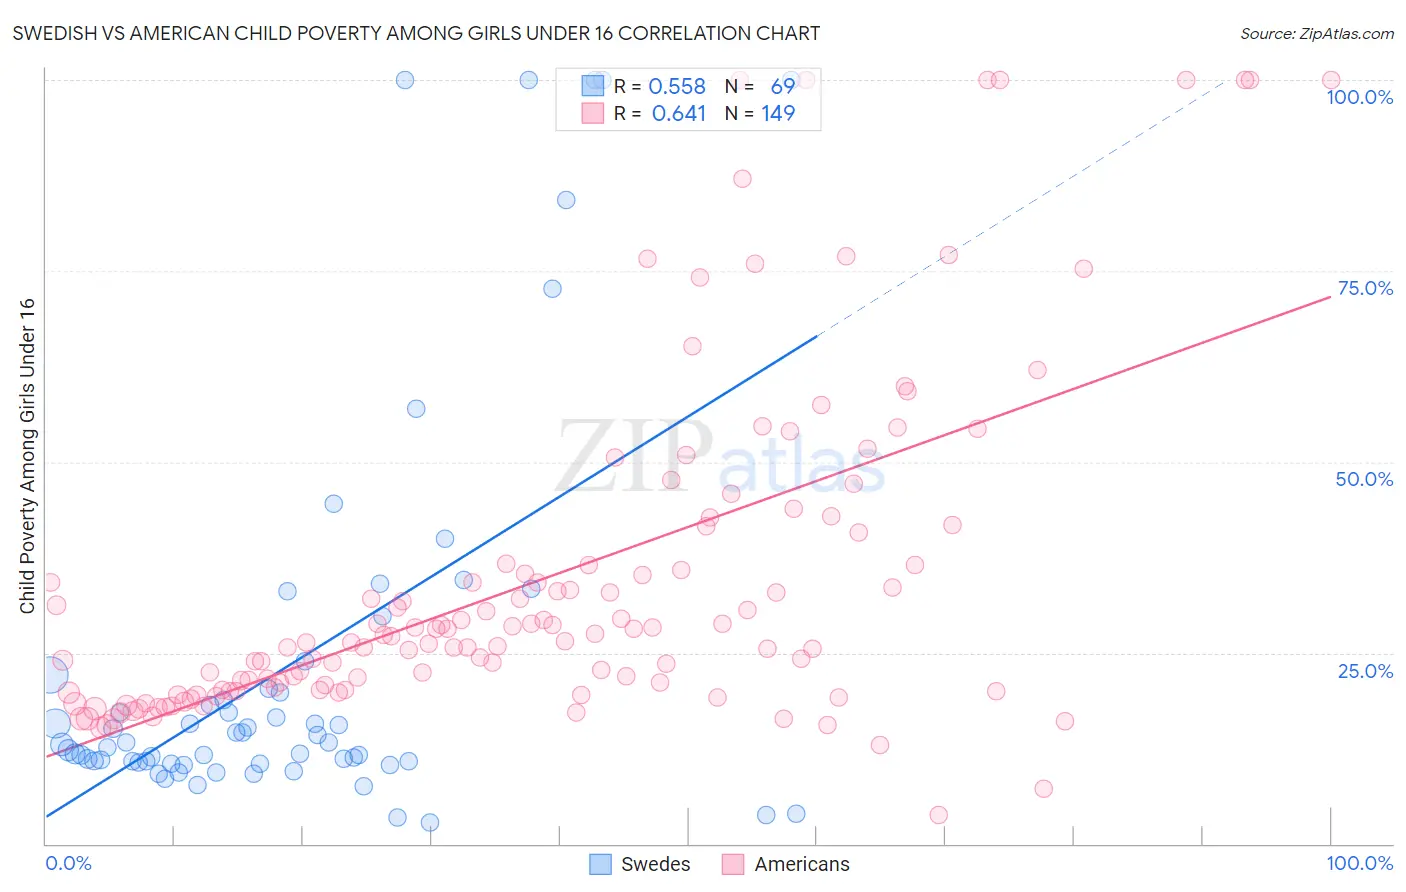 Swedish vs American Child Poverty Among Girls Under 16